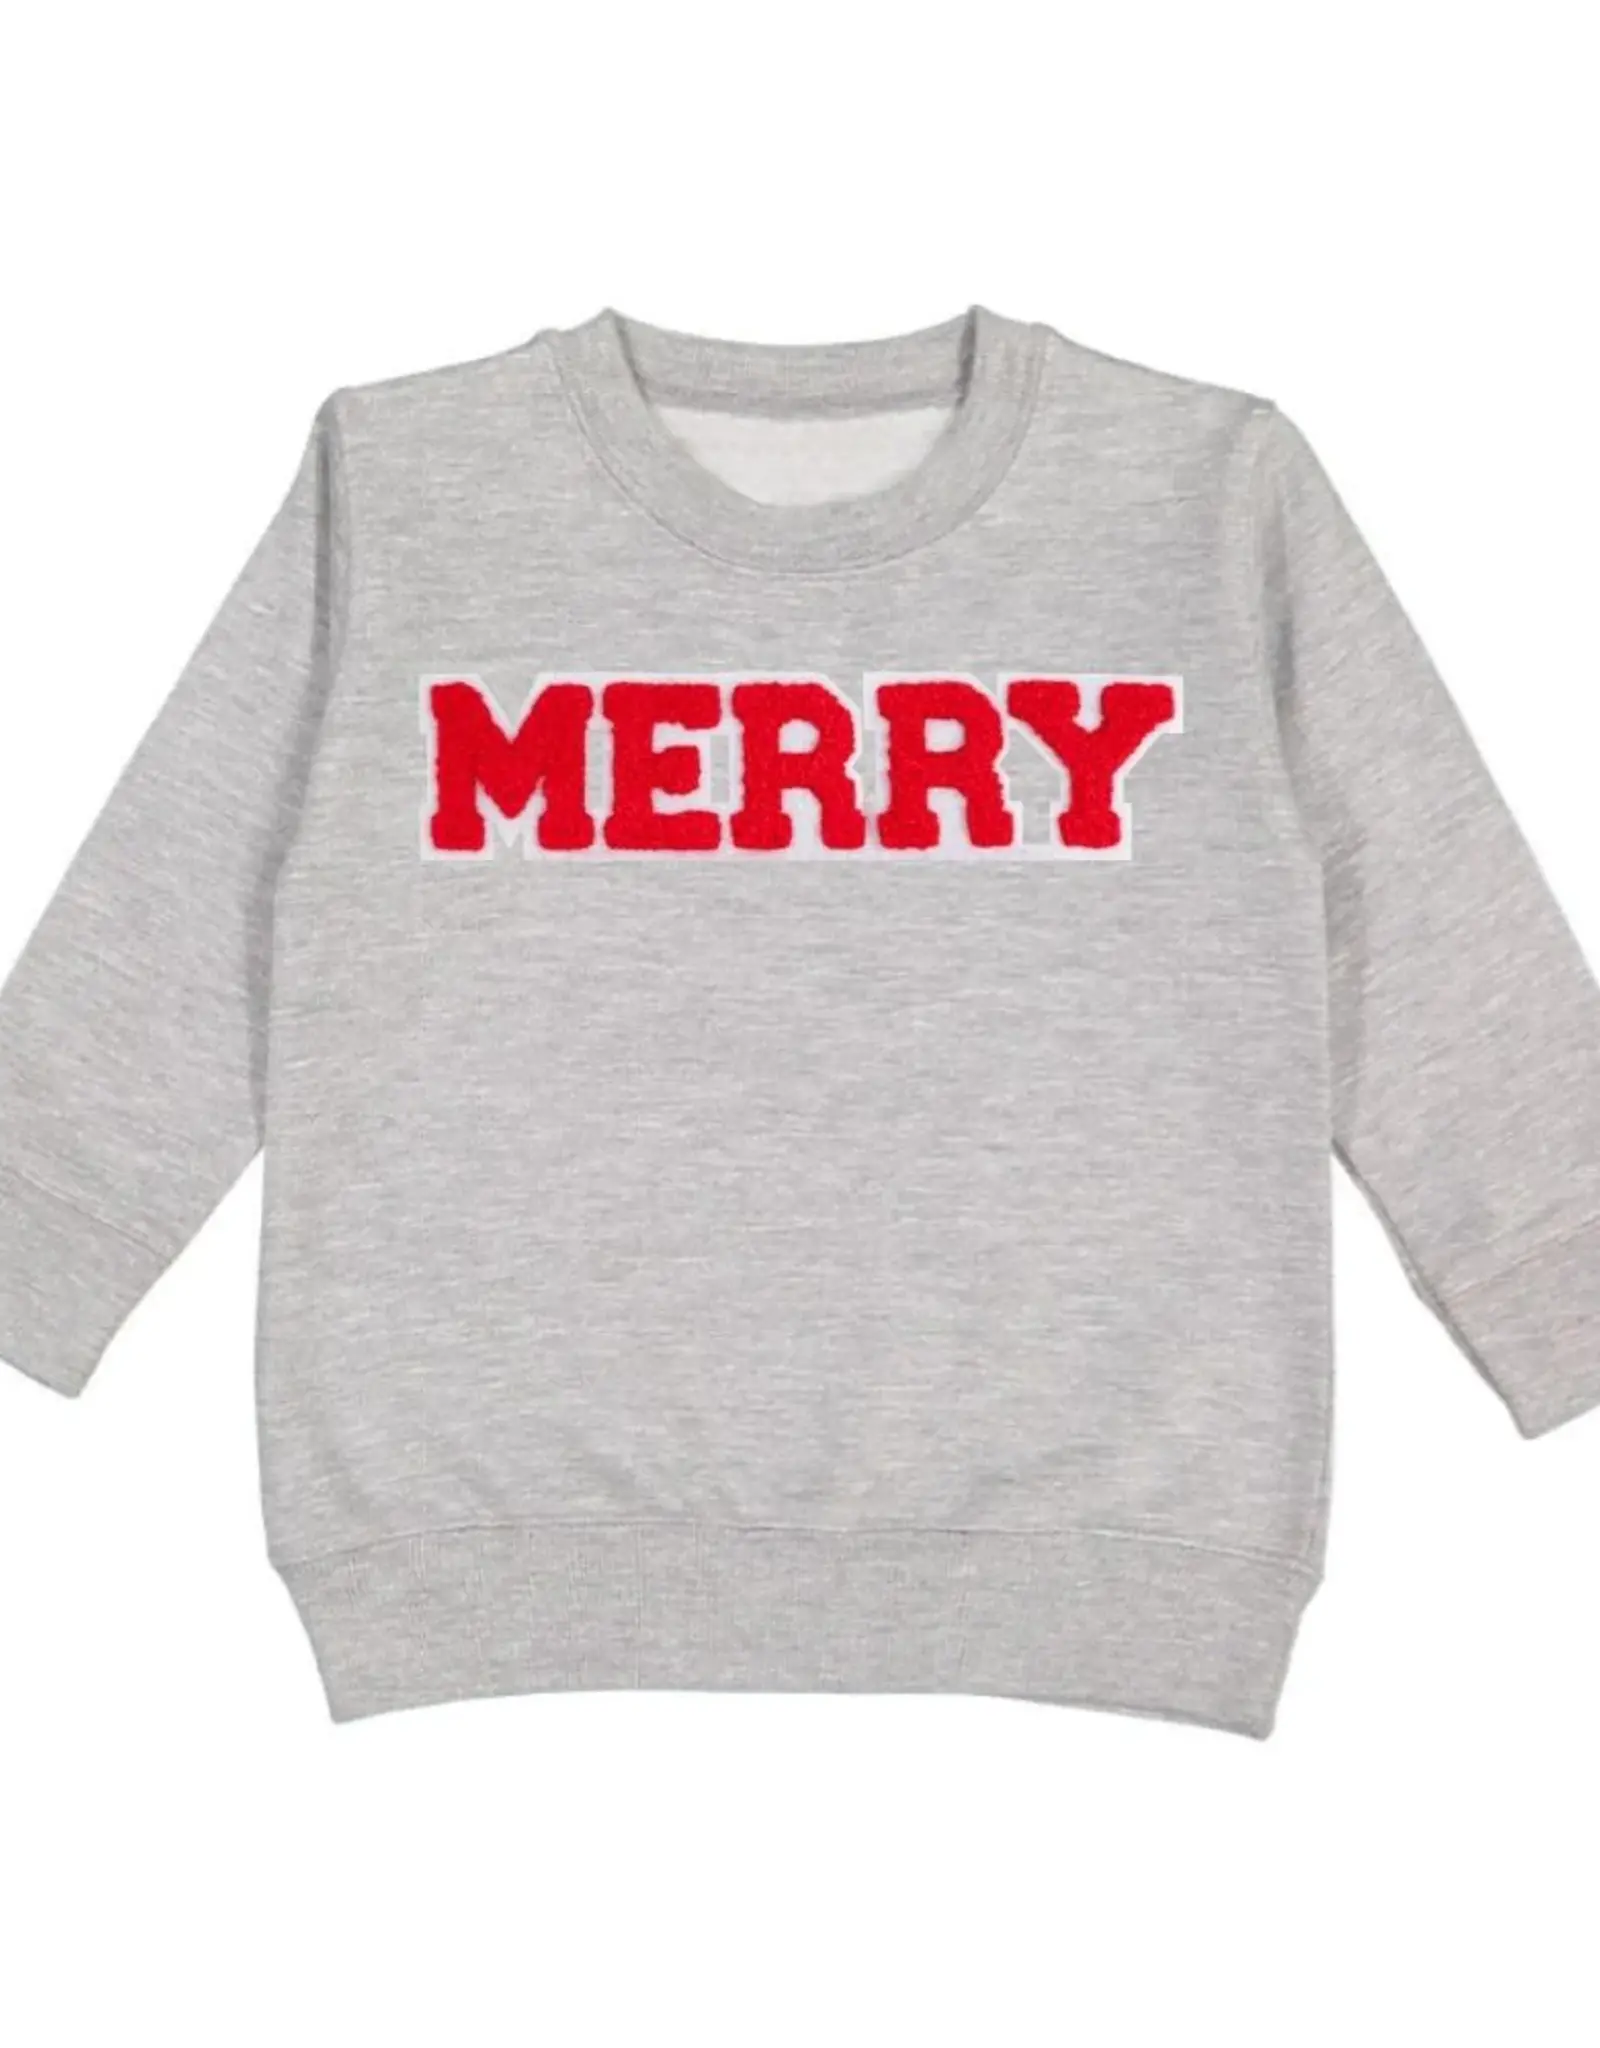 Wink 4YO: Merry Patch Christmas Sweatshirt - Gray